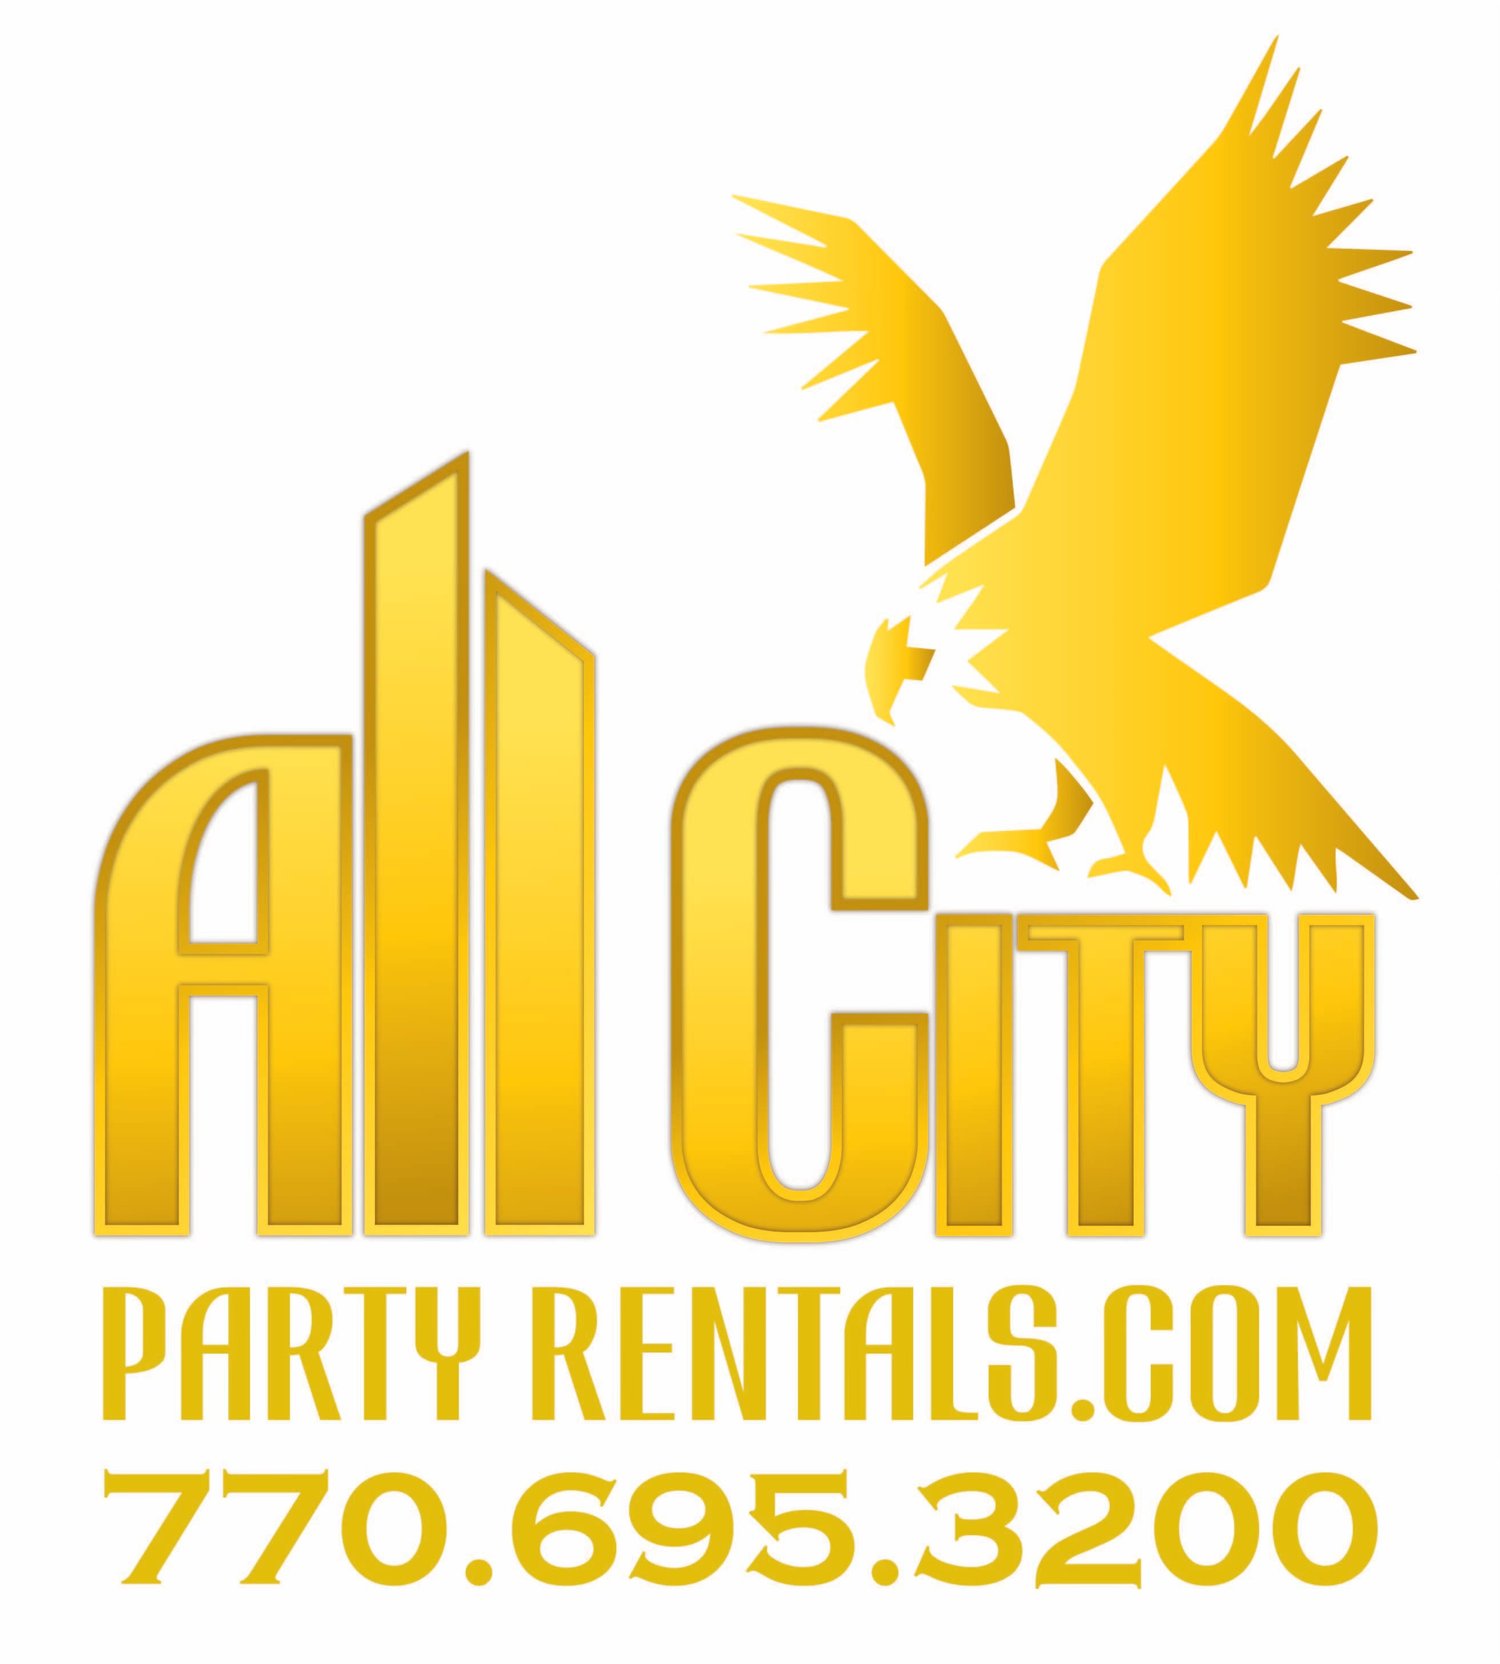 All City Party Rentals